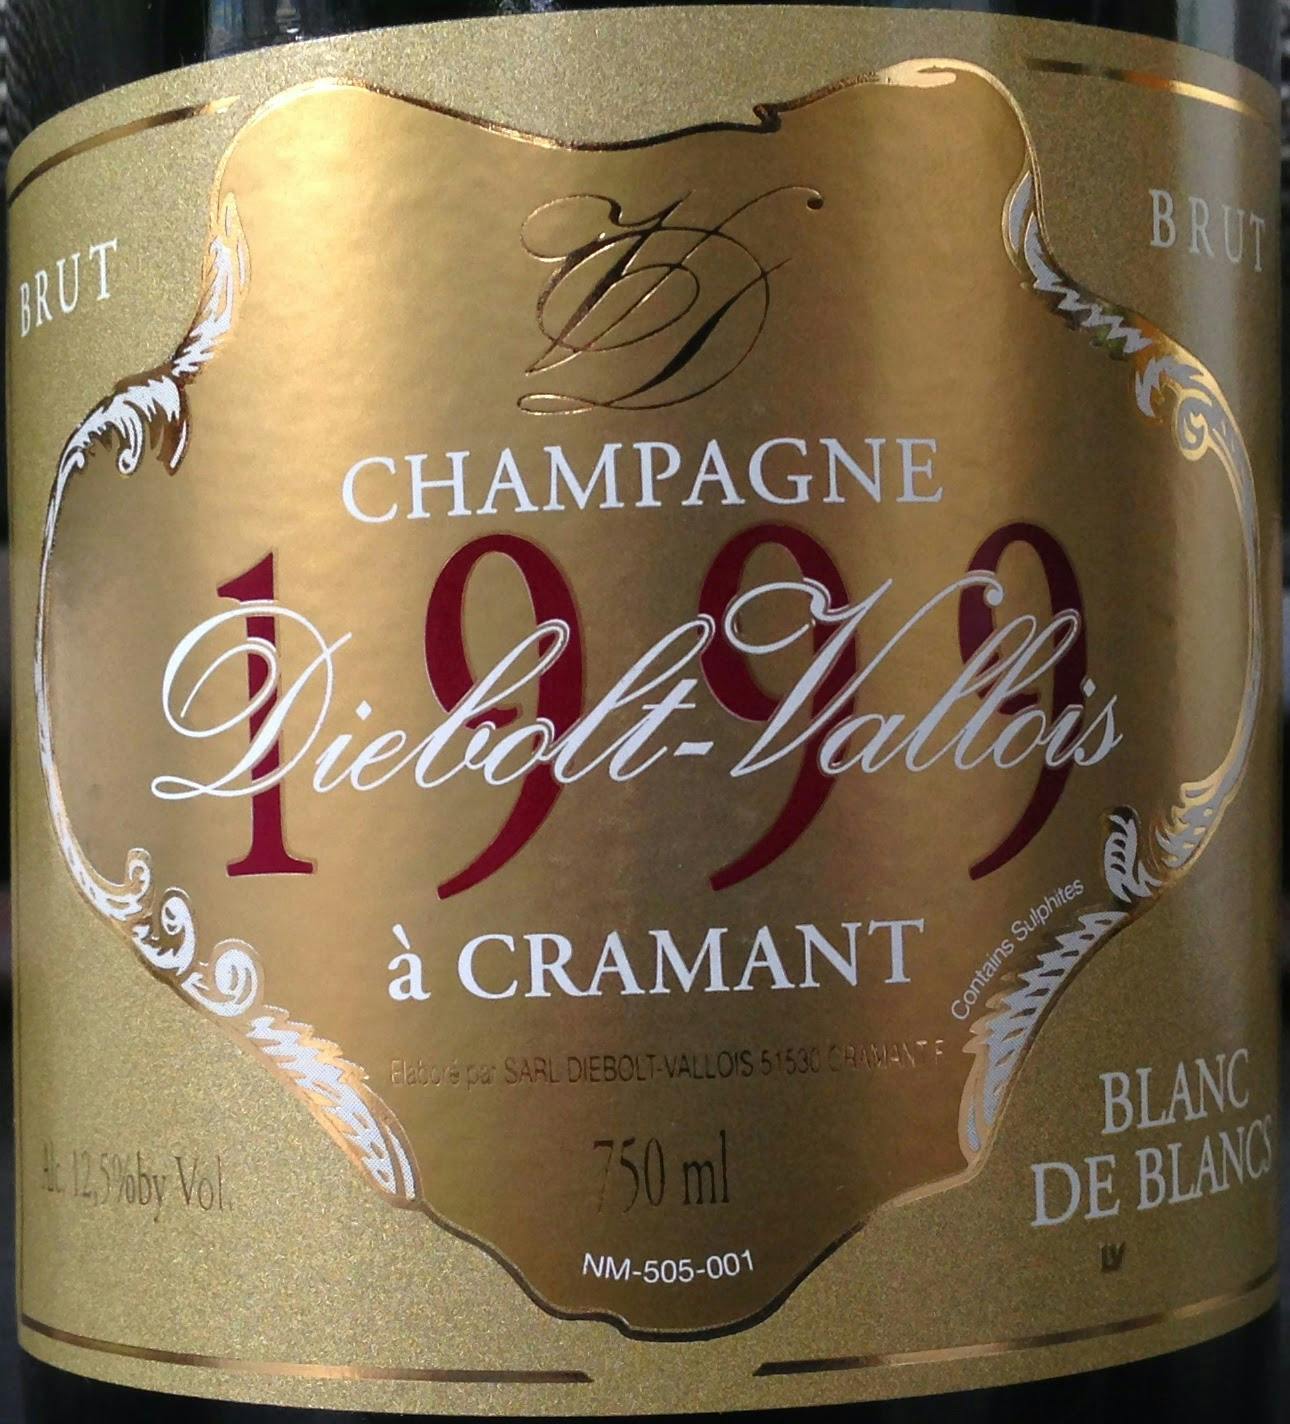 Champagne Diebolt Vallois Vintage 1996